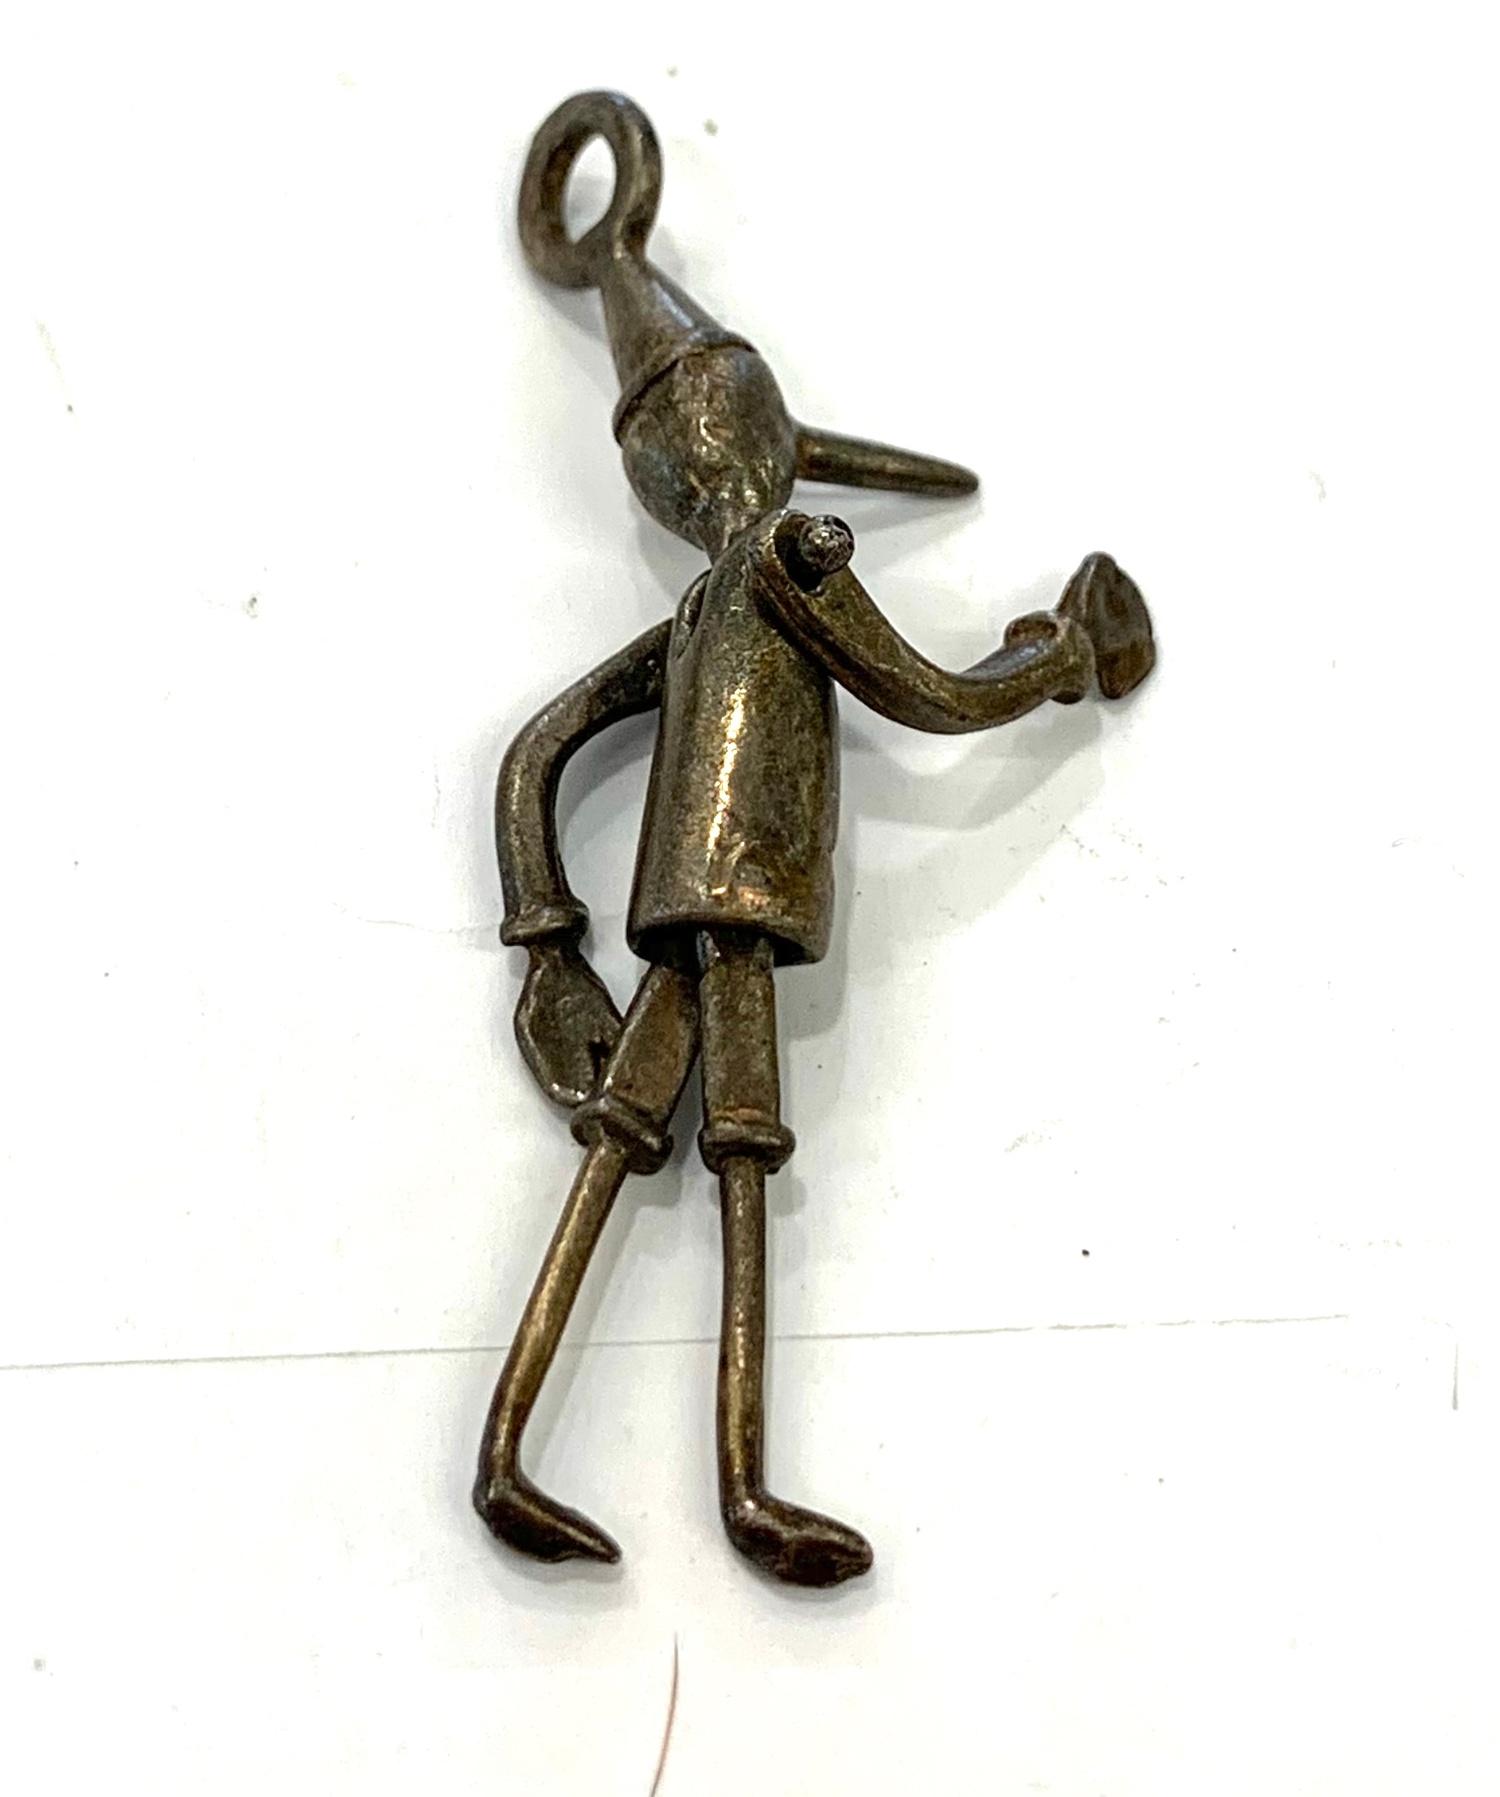 Pinocchio white metal necklace pendant - Image 3 of 3